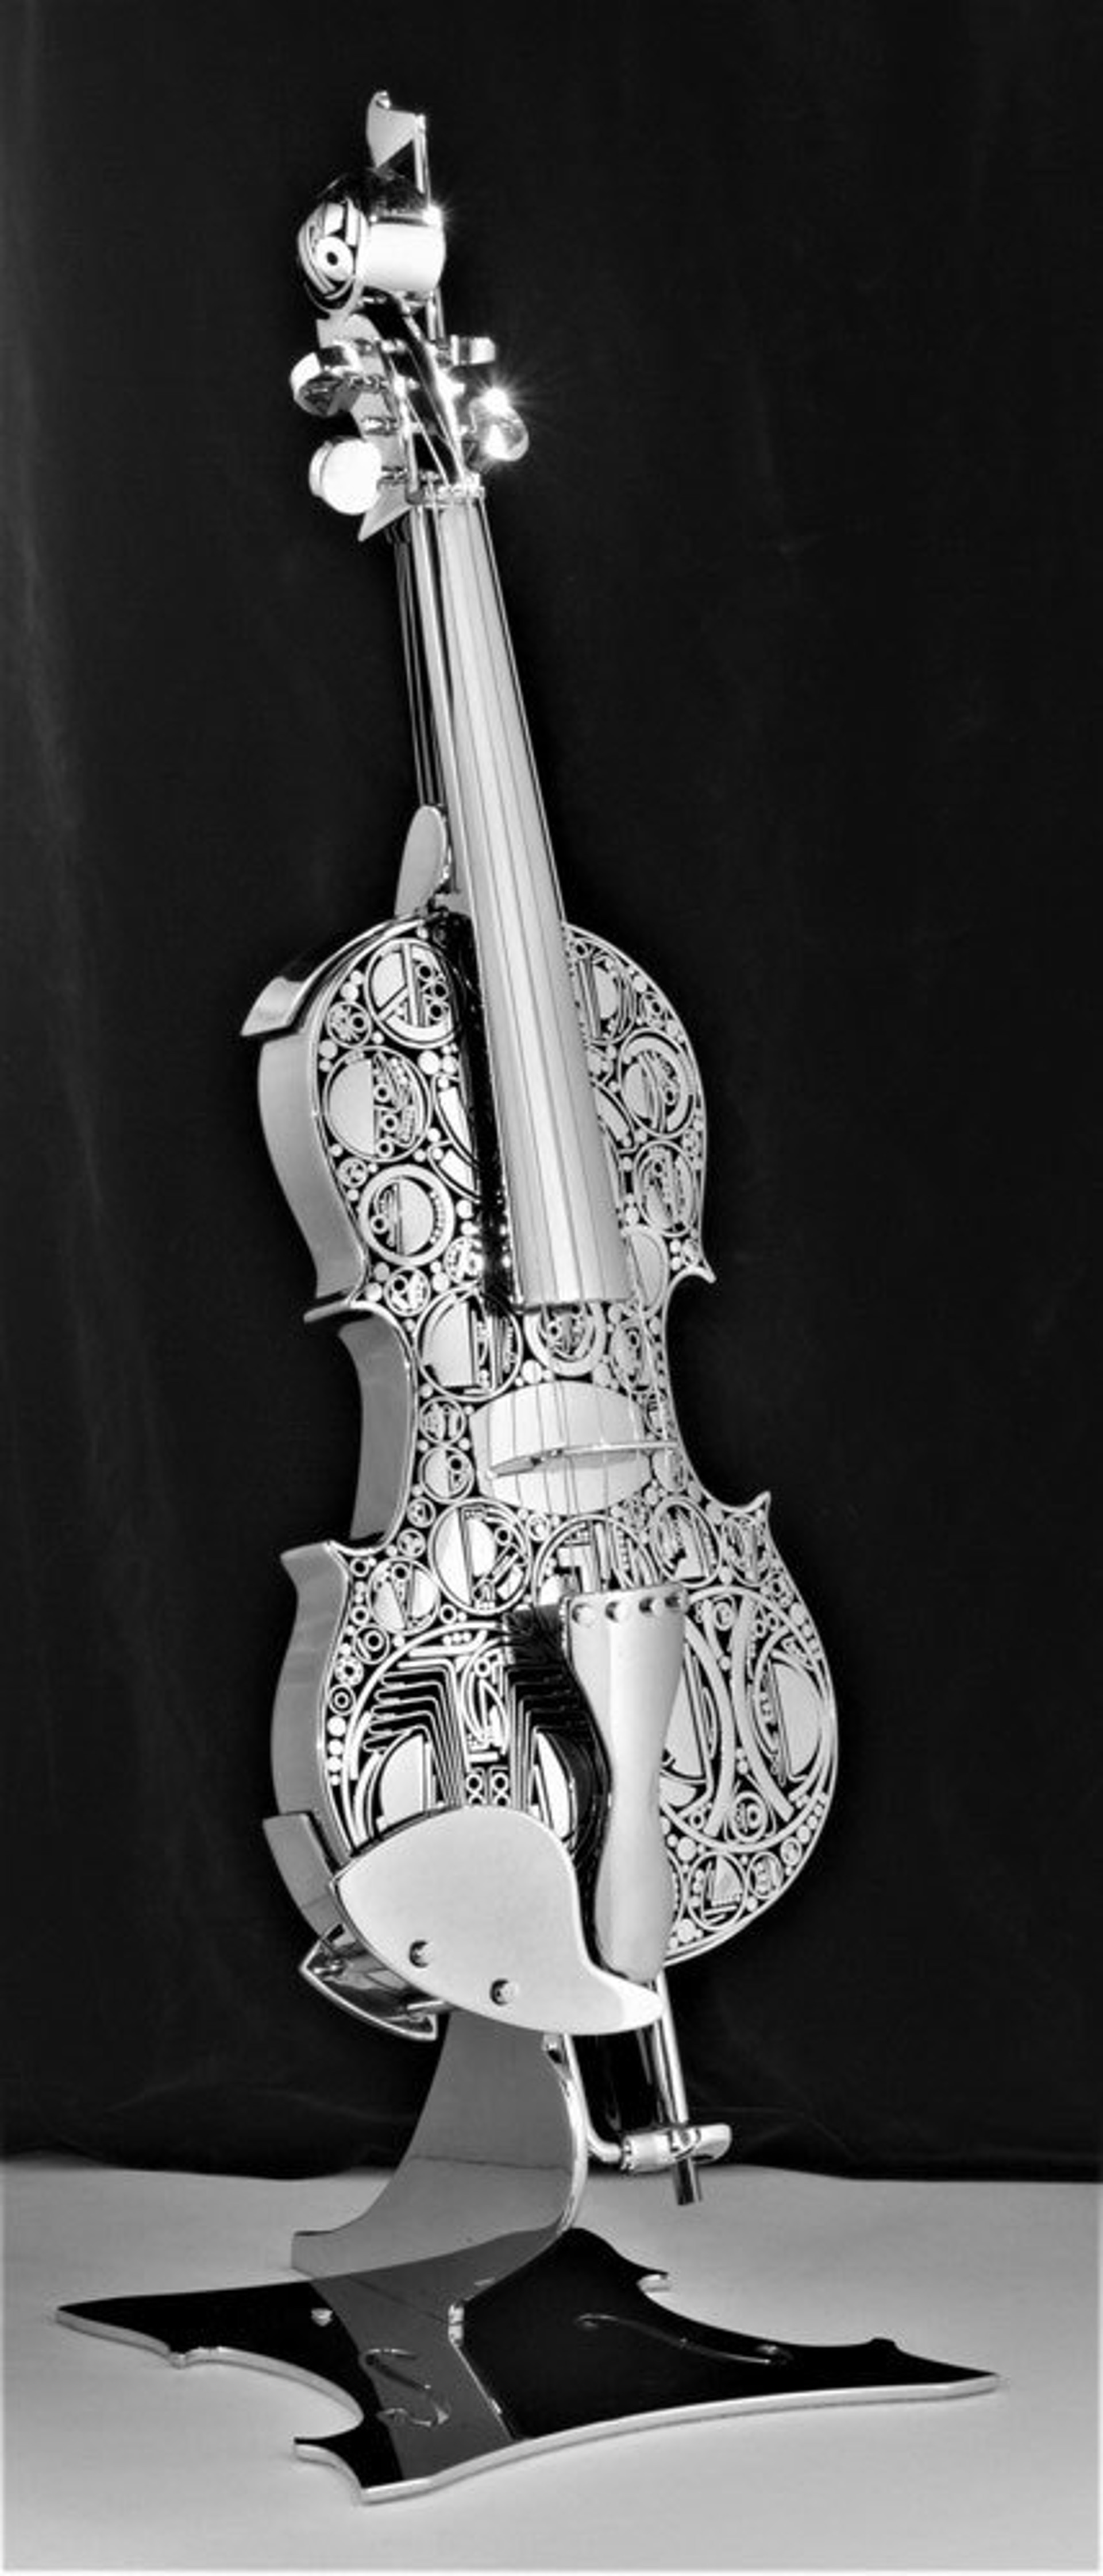 Violin by Dave Regier